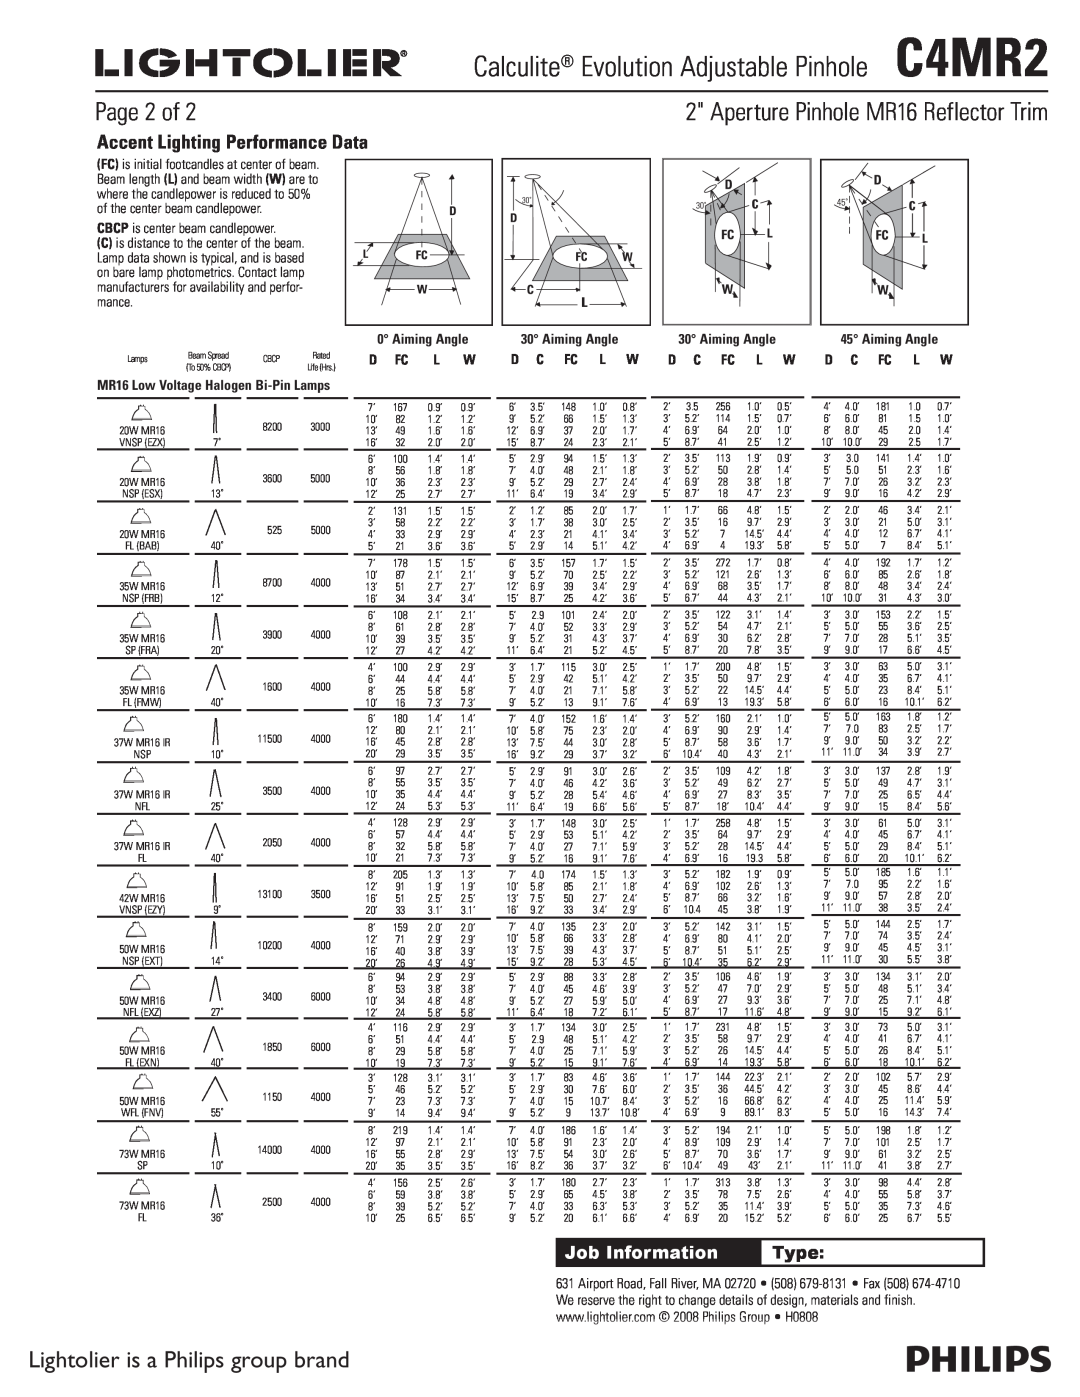 Lightolier Page 2 of, Calculite Evolution Adjustable PinholeC4MR2, Aperture Pinhole MR16 Reflector Trim, Type, D Fc 